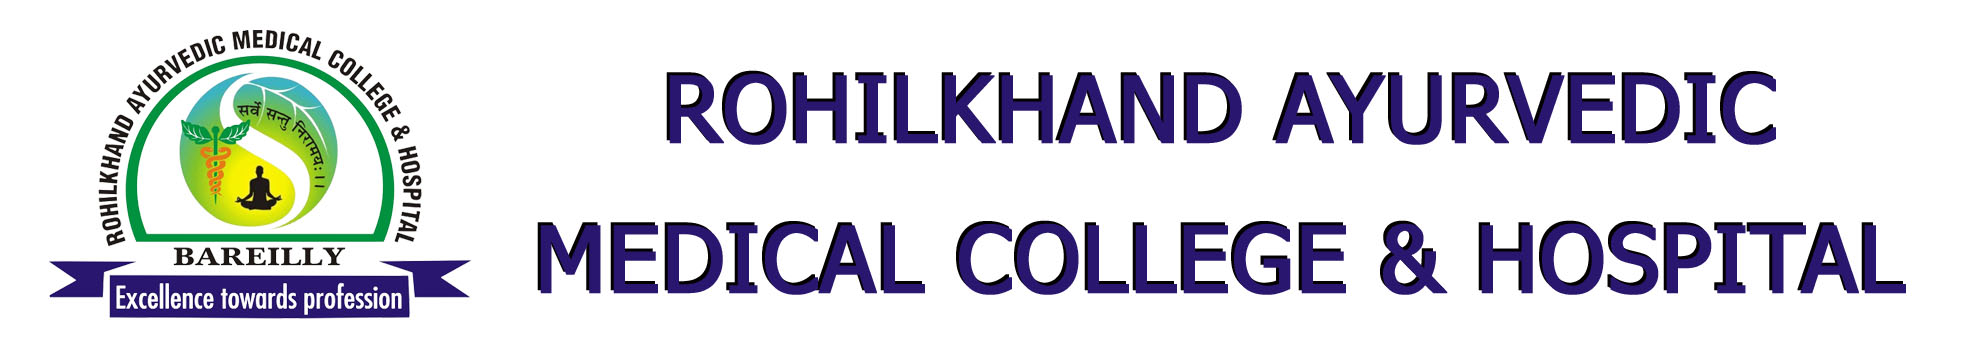 Rohilkhand Ayurvedic Medical College